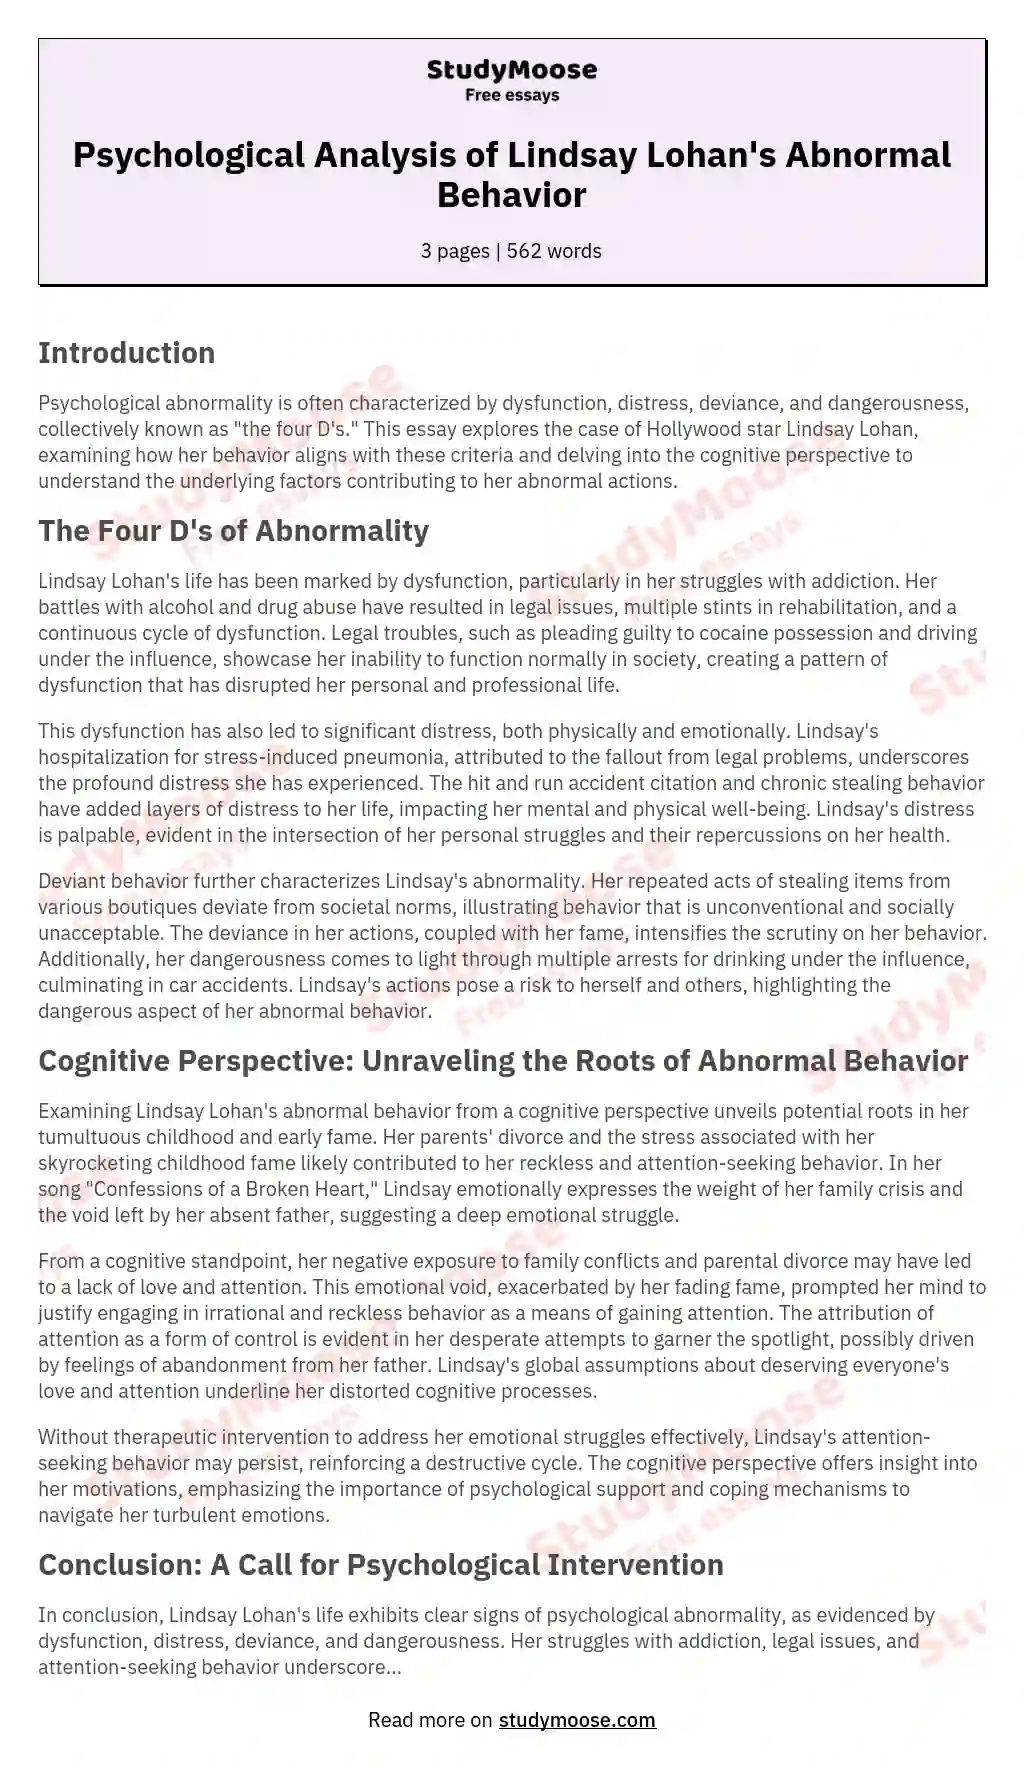 Psychological Analysis of Lindsay Lohan's Abnormal Behavior essay